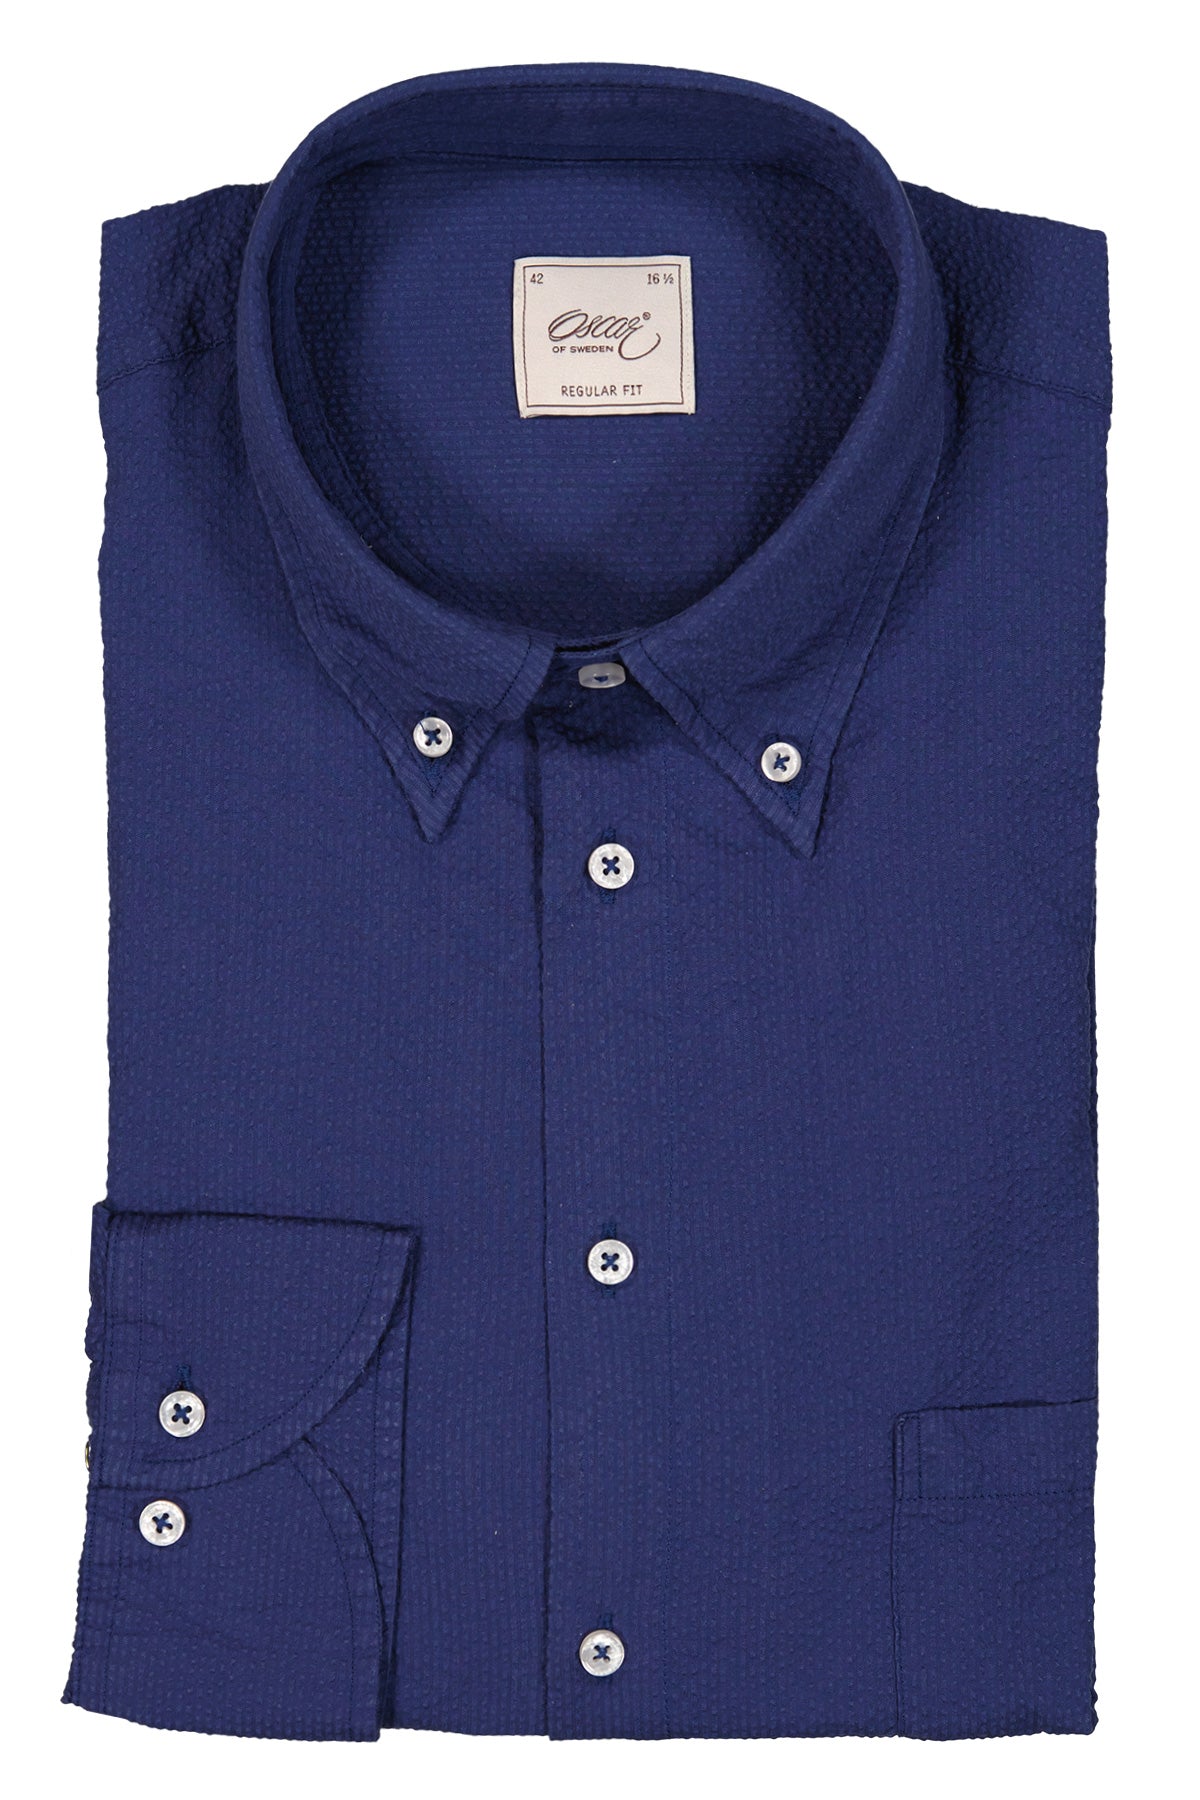 Indigo blue button down seersucker regular fit shirt